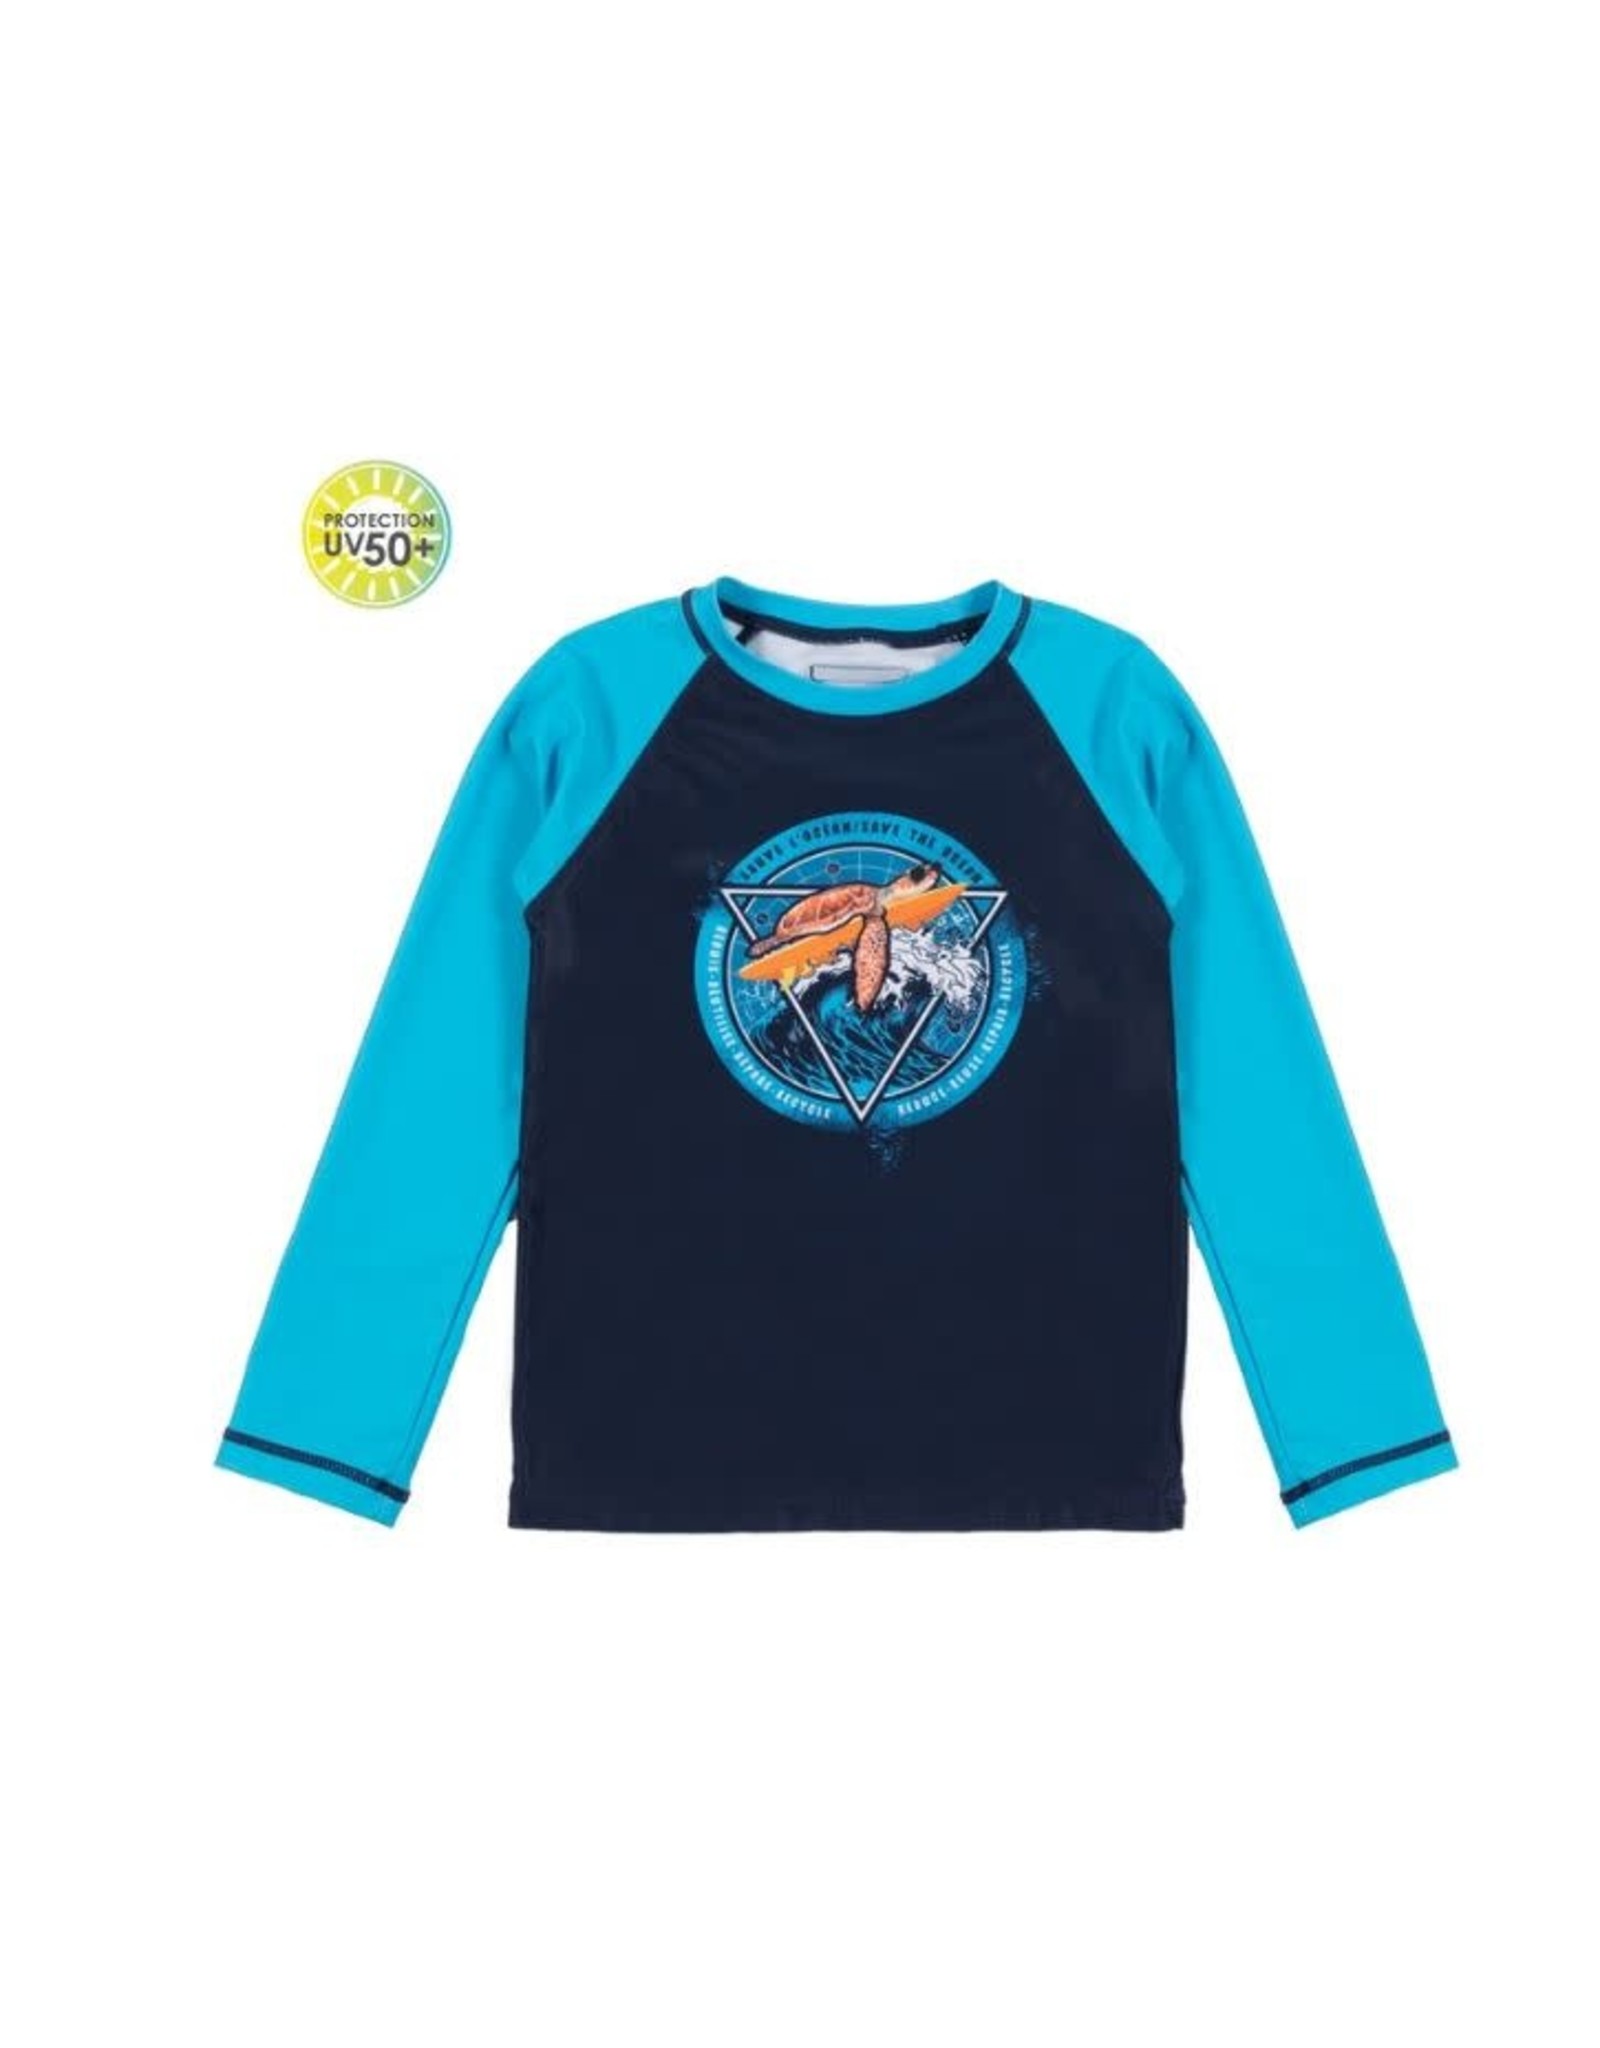 Noruk Save the Ocean Long Sleeve Rashguard Shirt